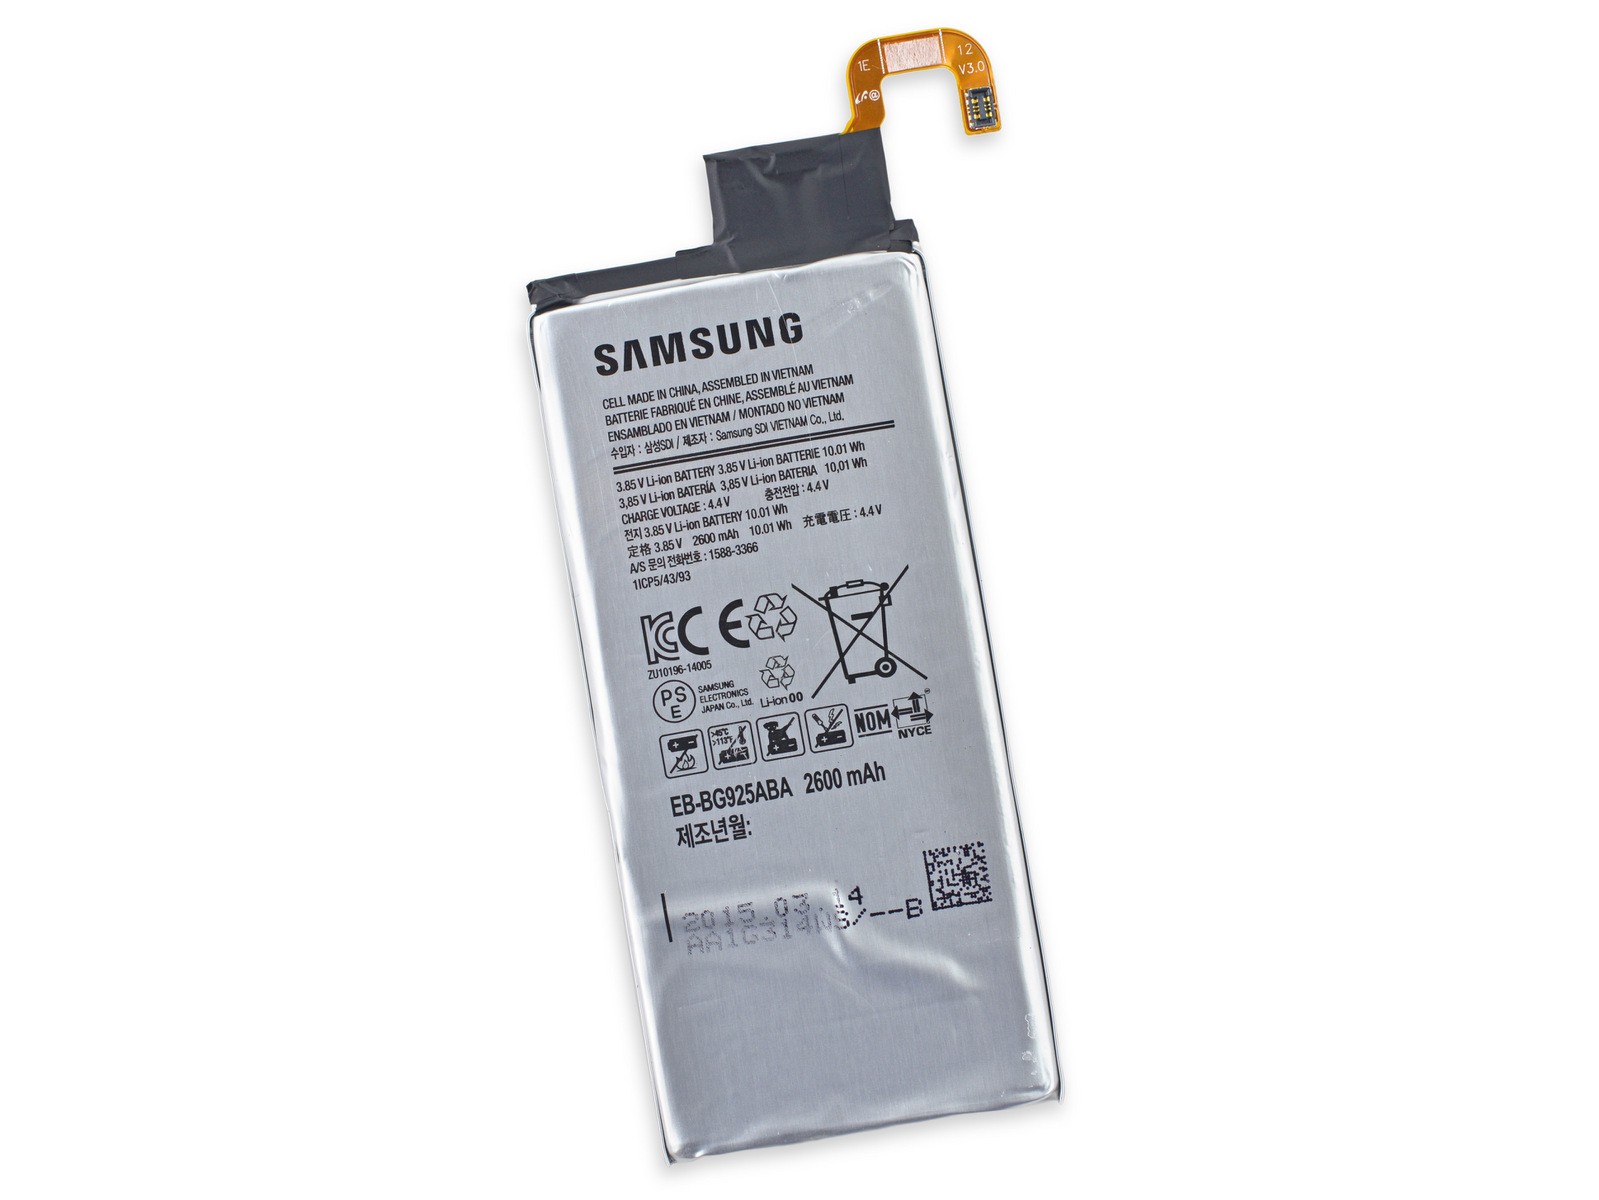 Samsung Galaxy S6 Edge Gets Teardown Treatment the Battery is Buried Deep Inside 477898 11